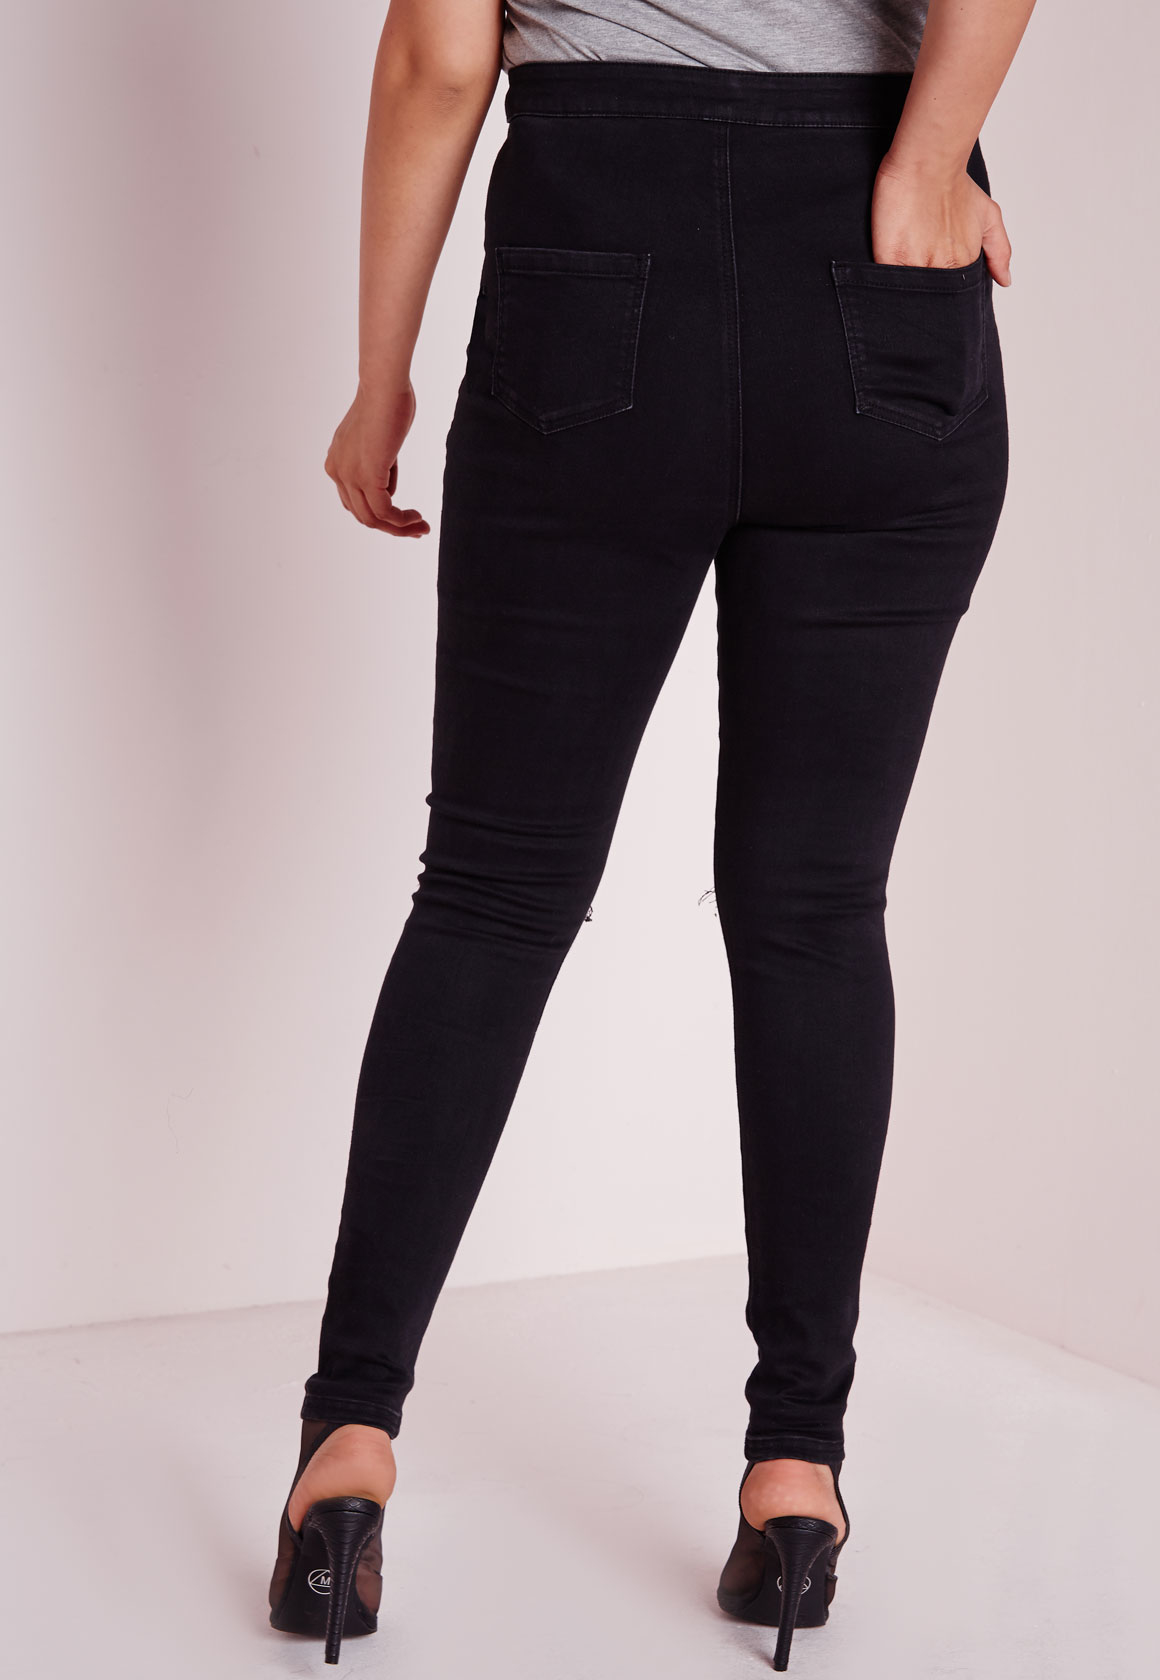 Black skinny jeans plus size cheap myer